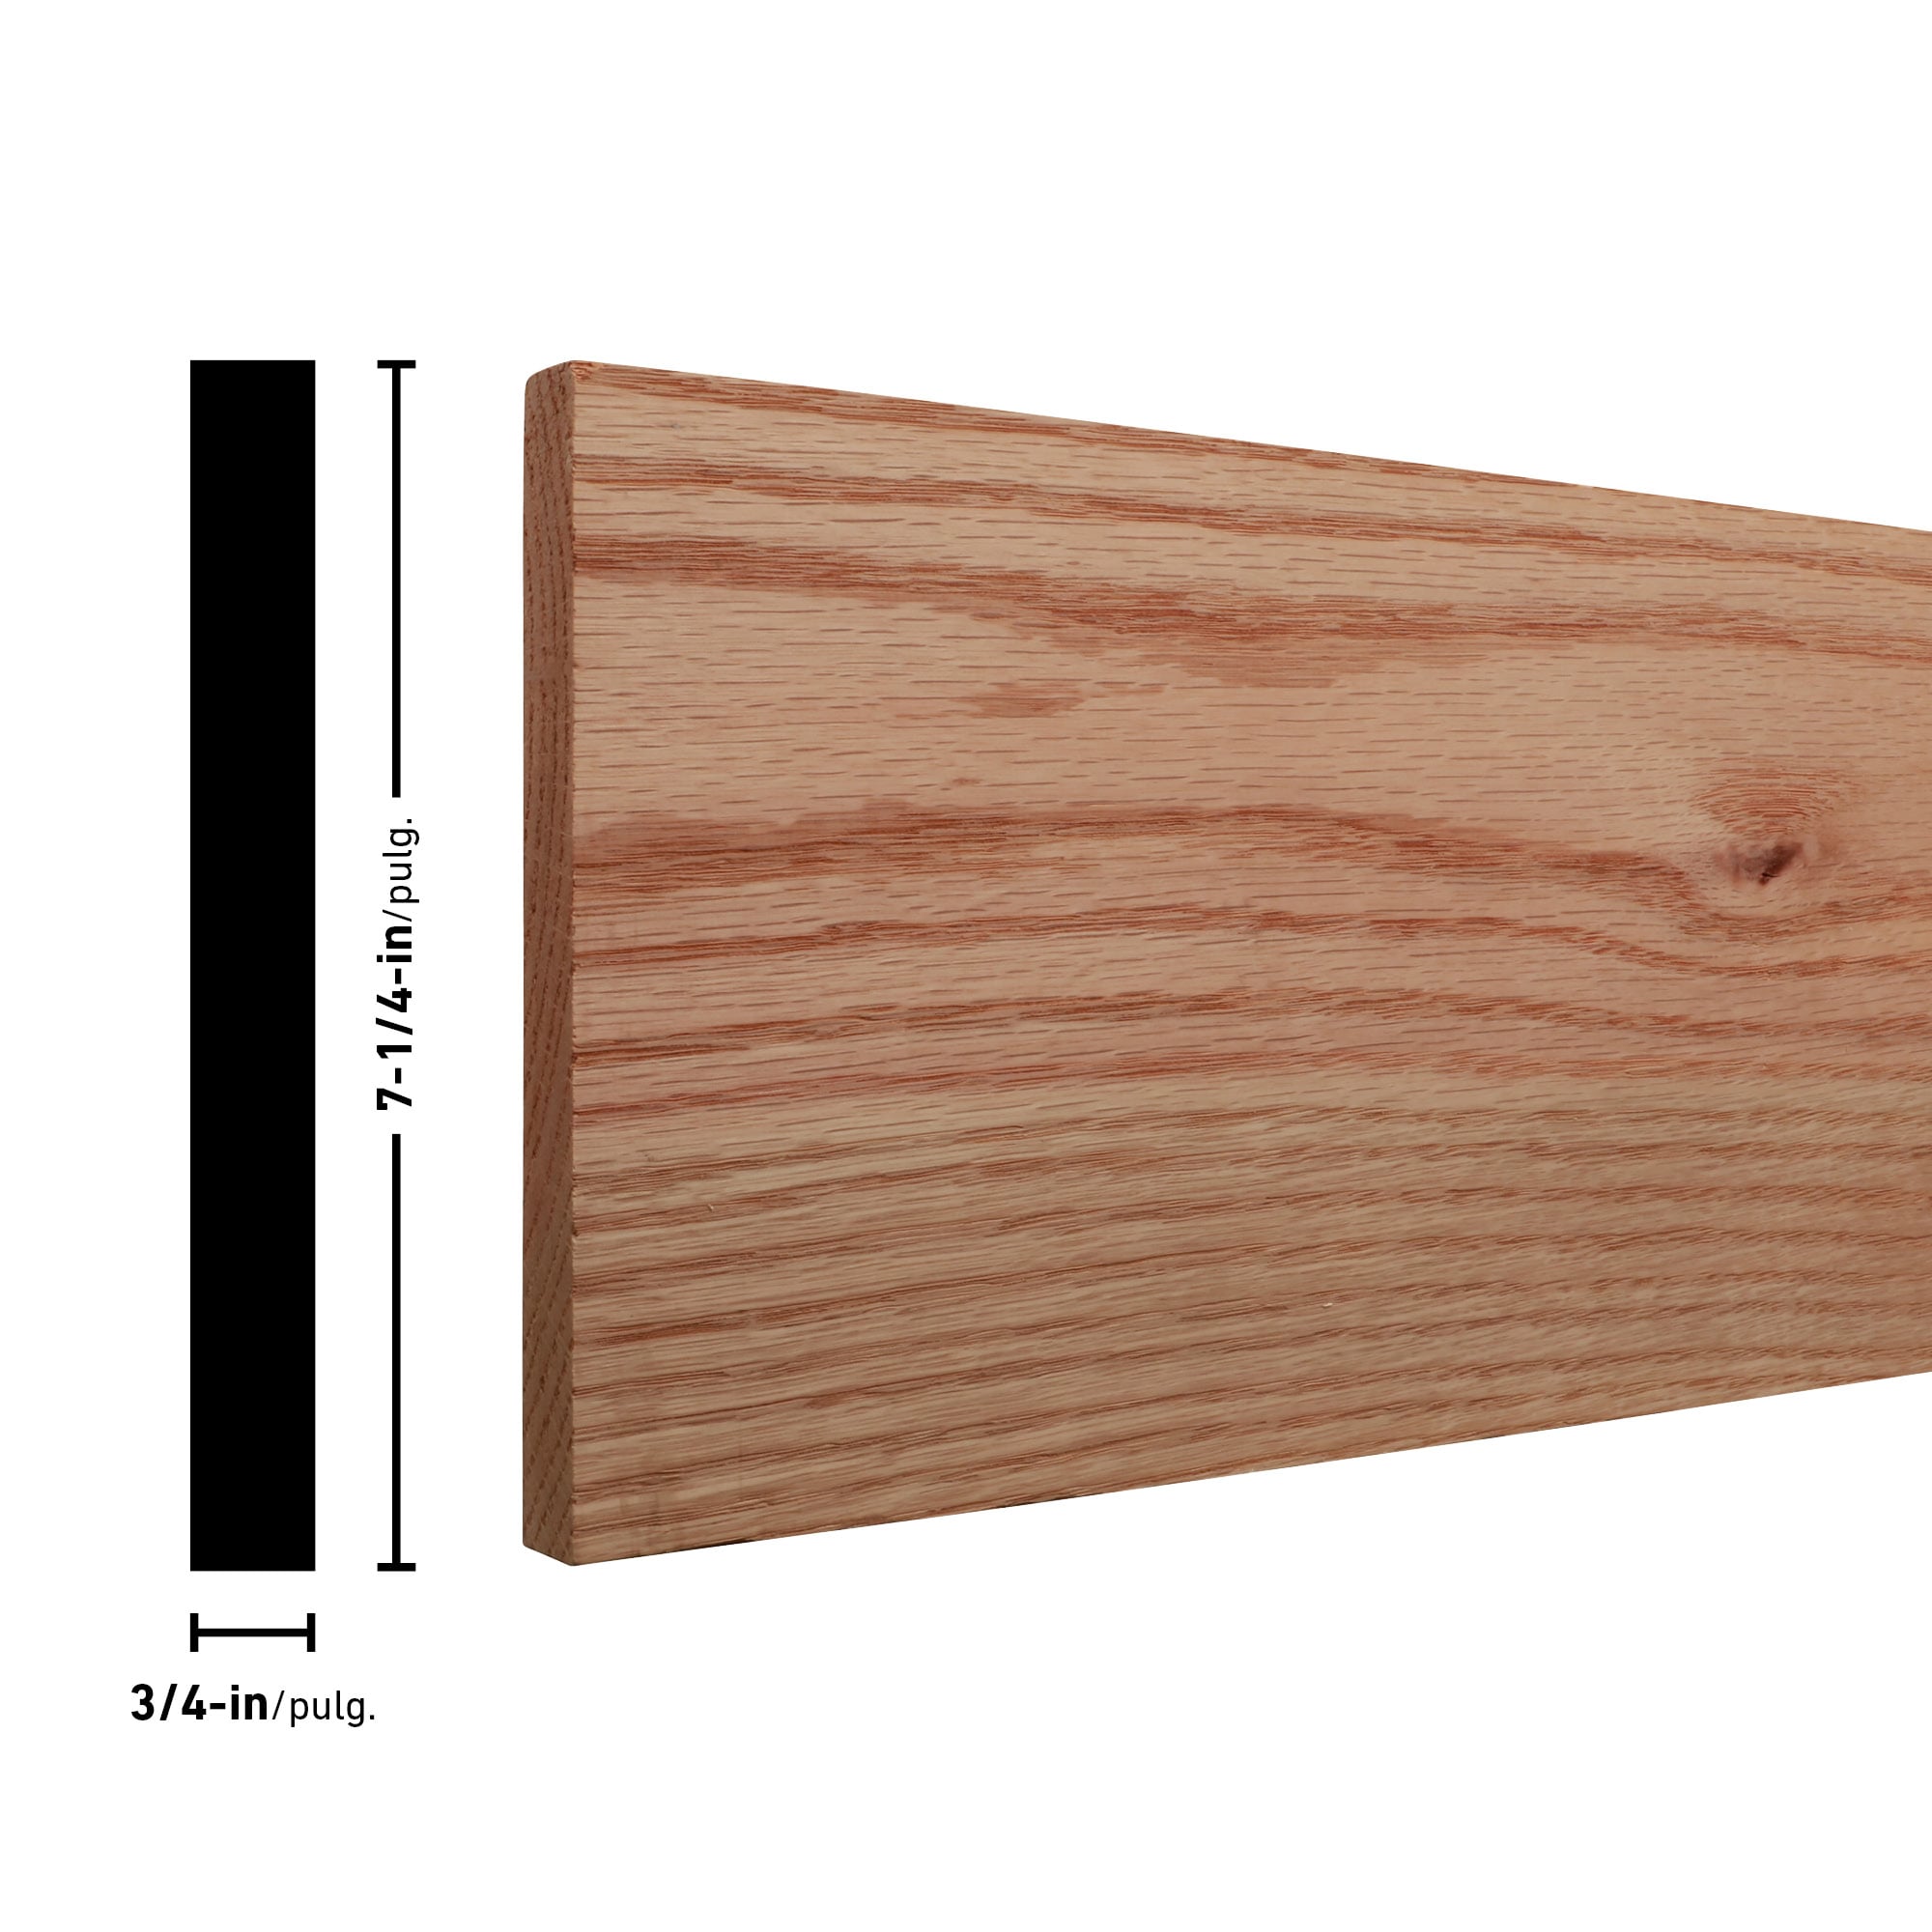 Hardwood Plywood, 4 in. x 12 in. x 1/8 in.